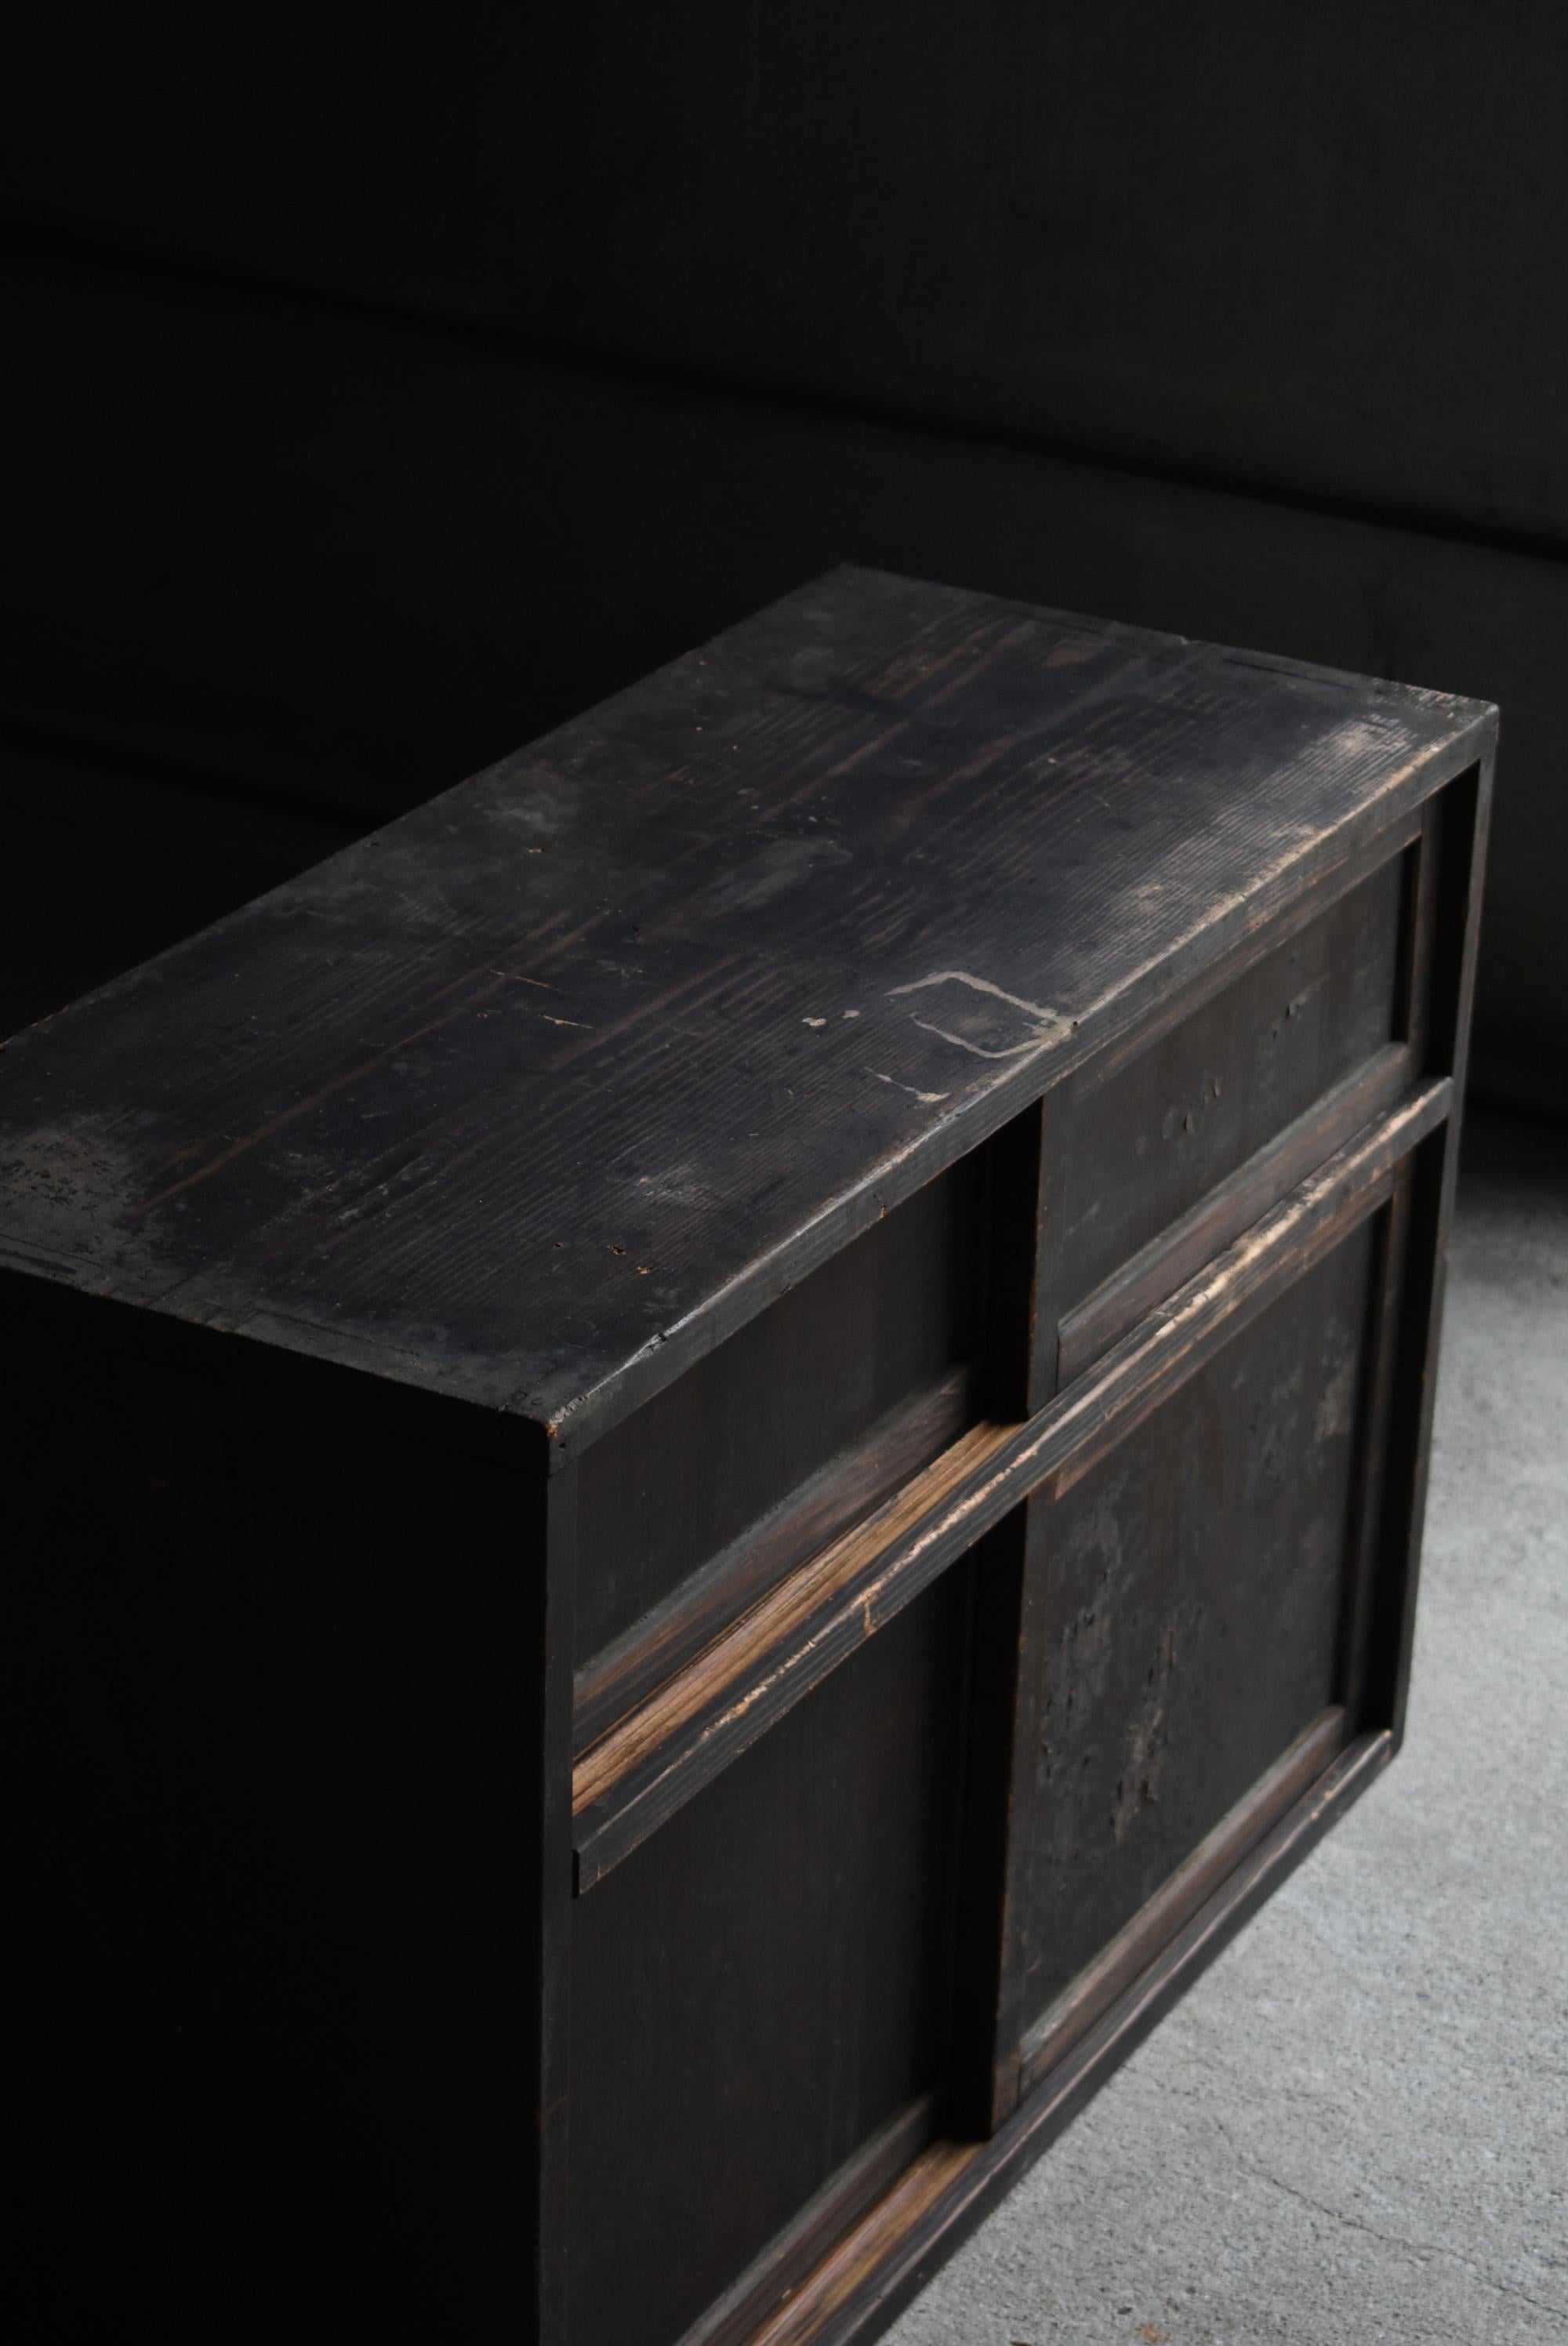 1800s-1900s Japanese black tansu antique chest furniture cabinet wabisabi

Size: W 795, D 330, H 540.